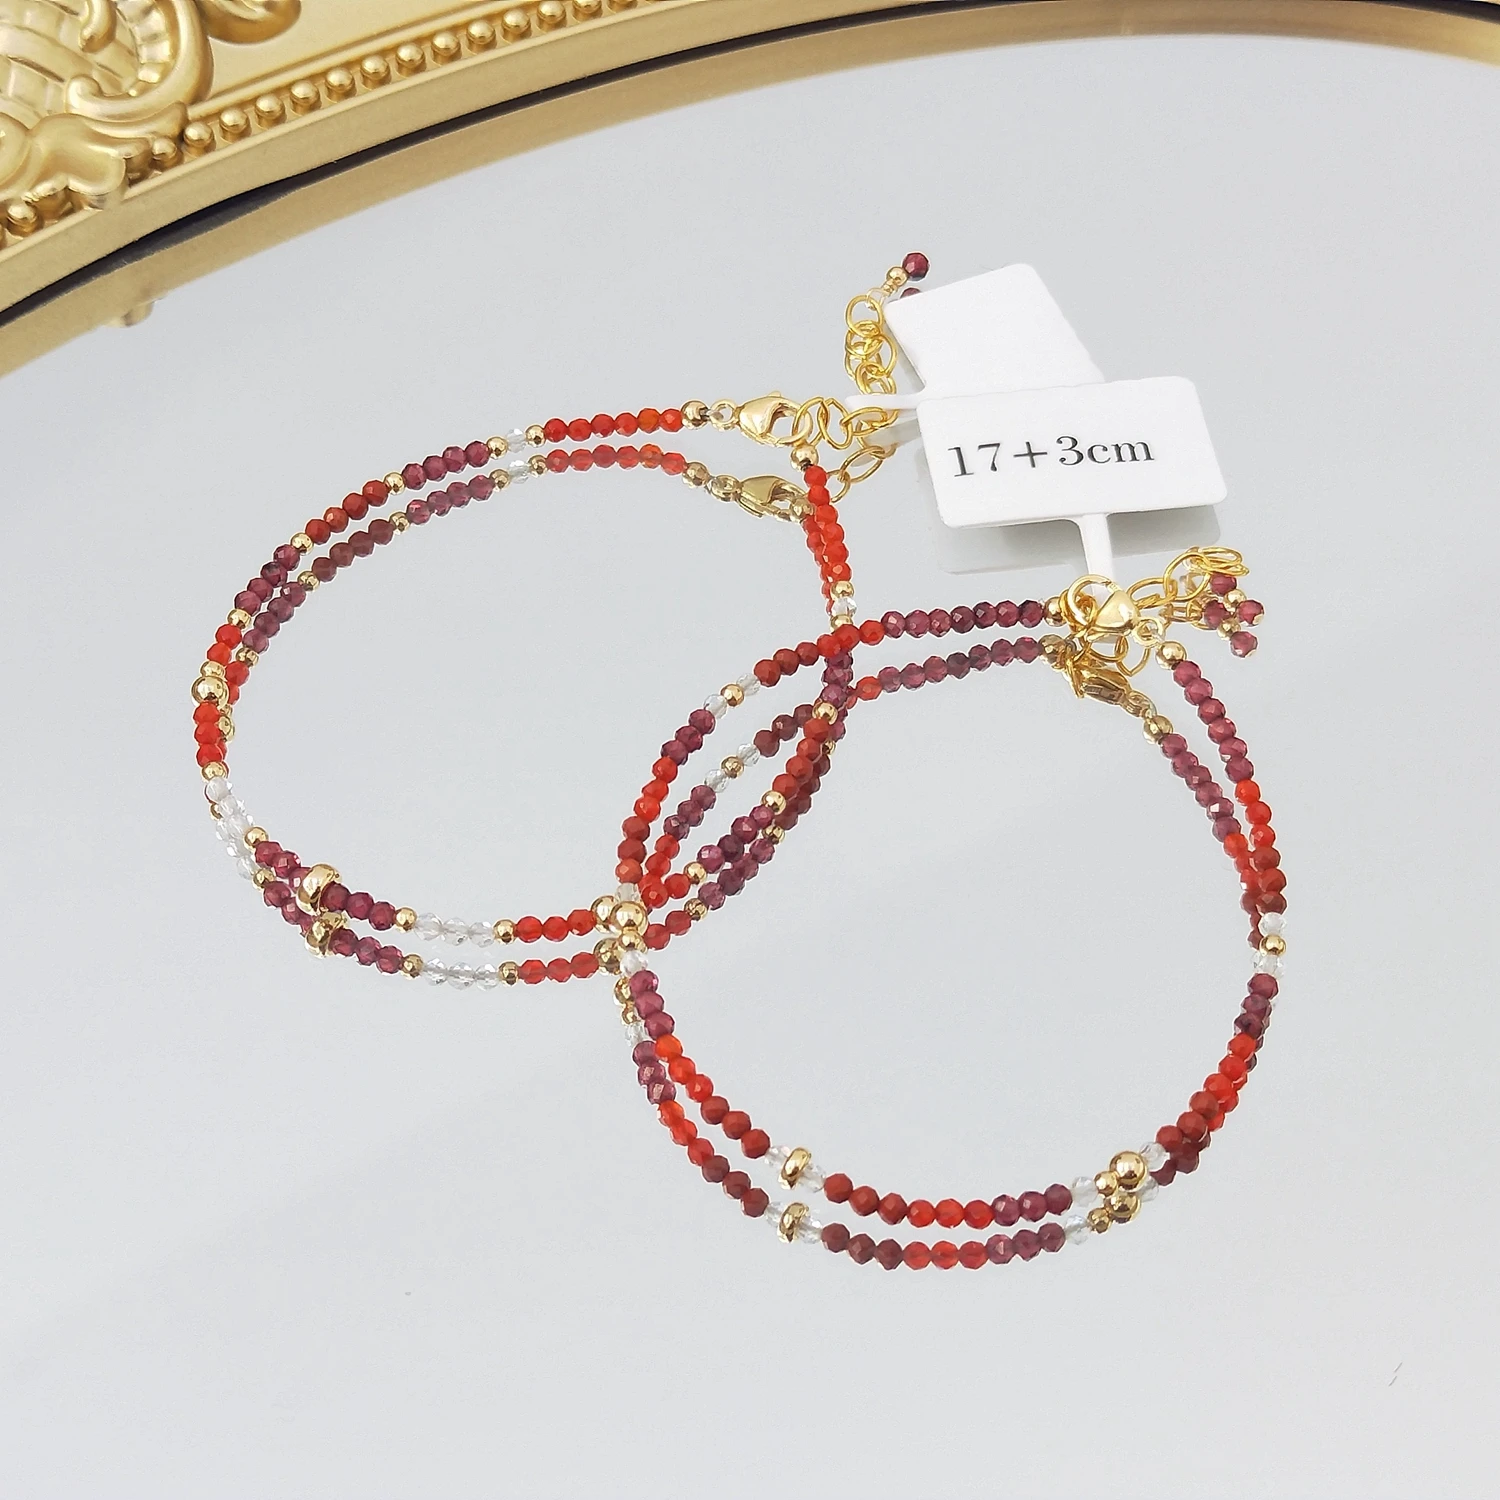 Lii Ji Carnelian Red Jasper Garnet  Clear Quartz 2mm American 14K Gold Filled Jewelry